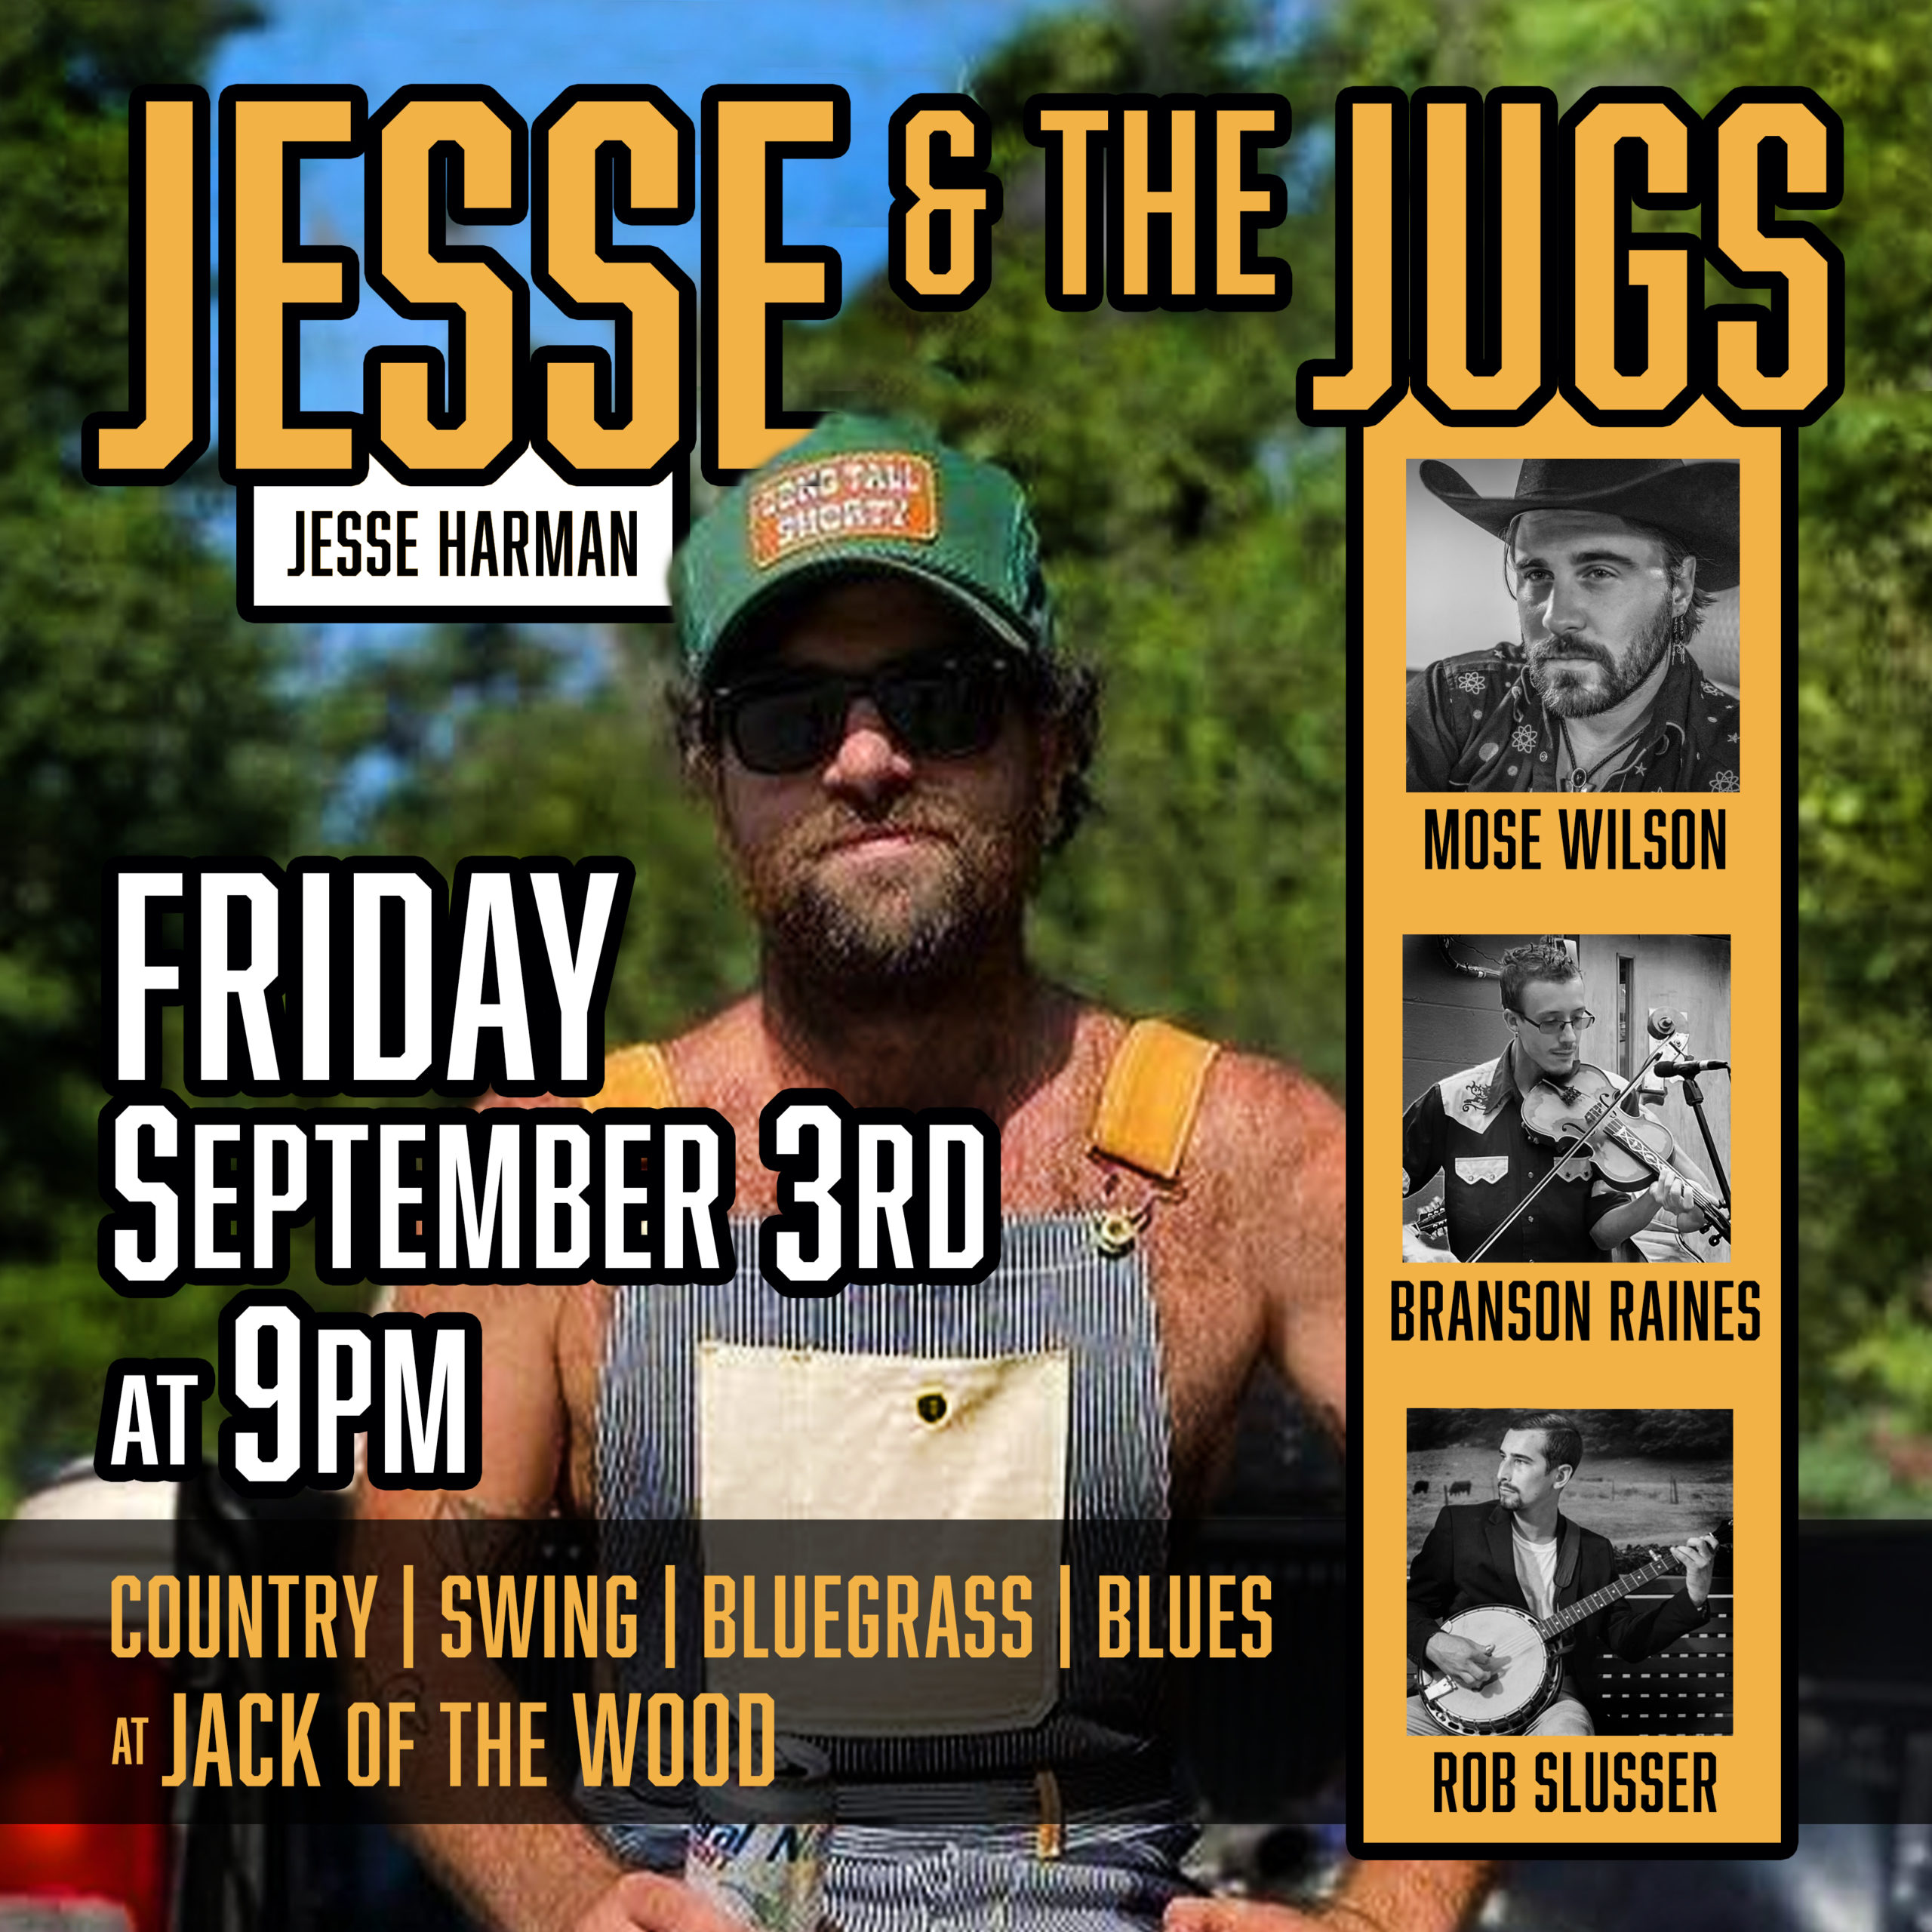 Jesse & the Jugs